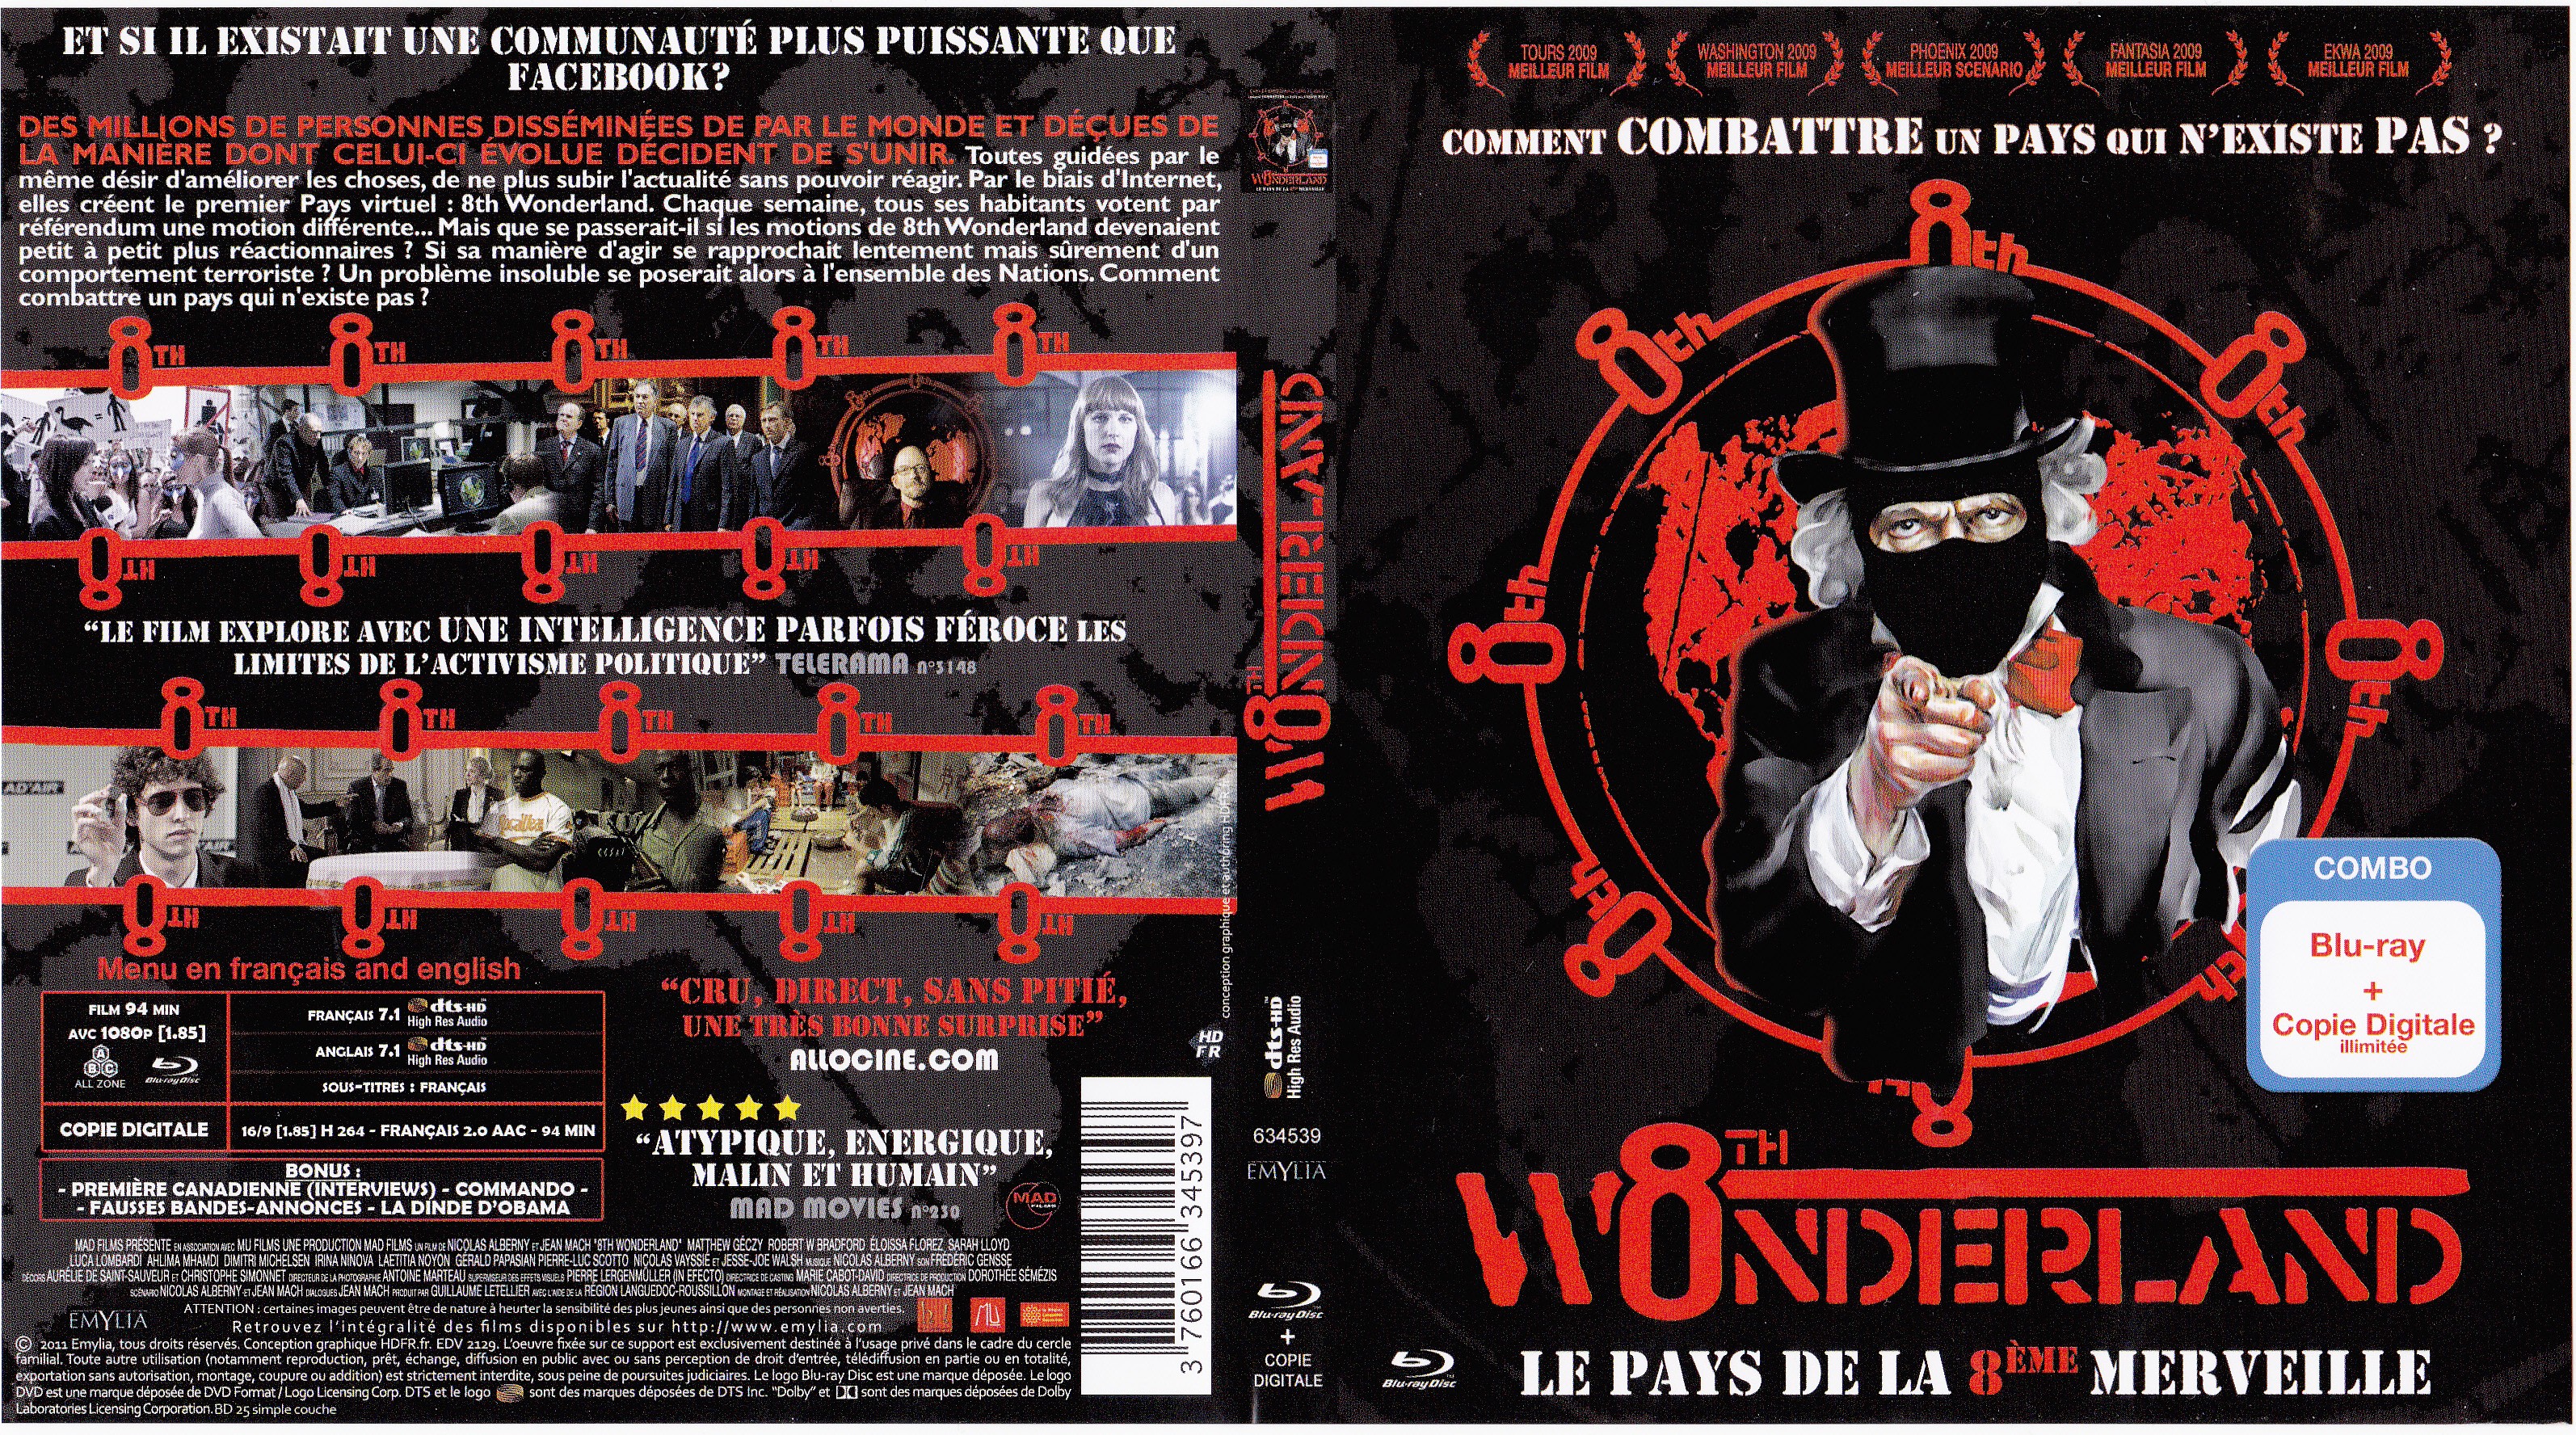 Jaquette DVD 8th wonderland (BLU-RAY)